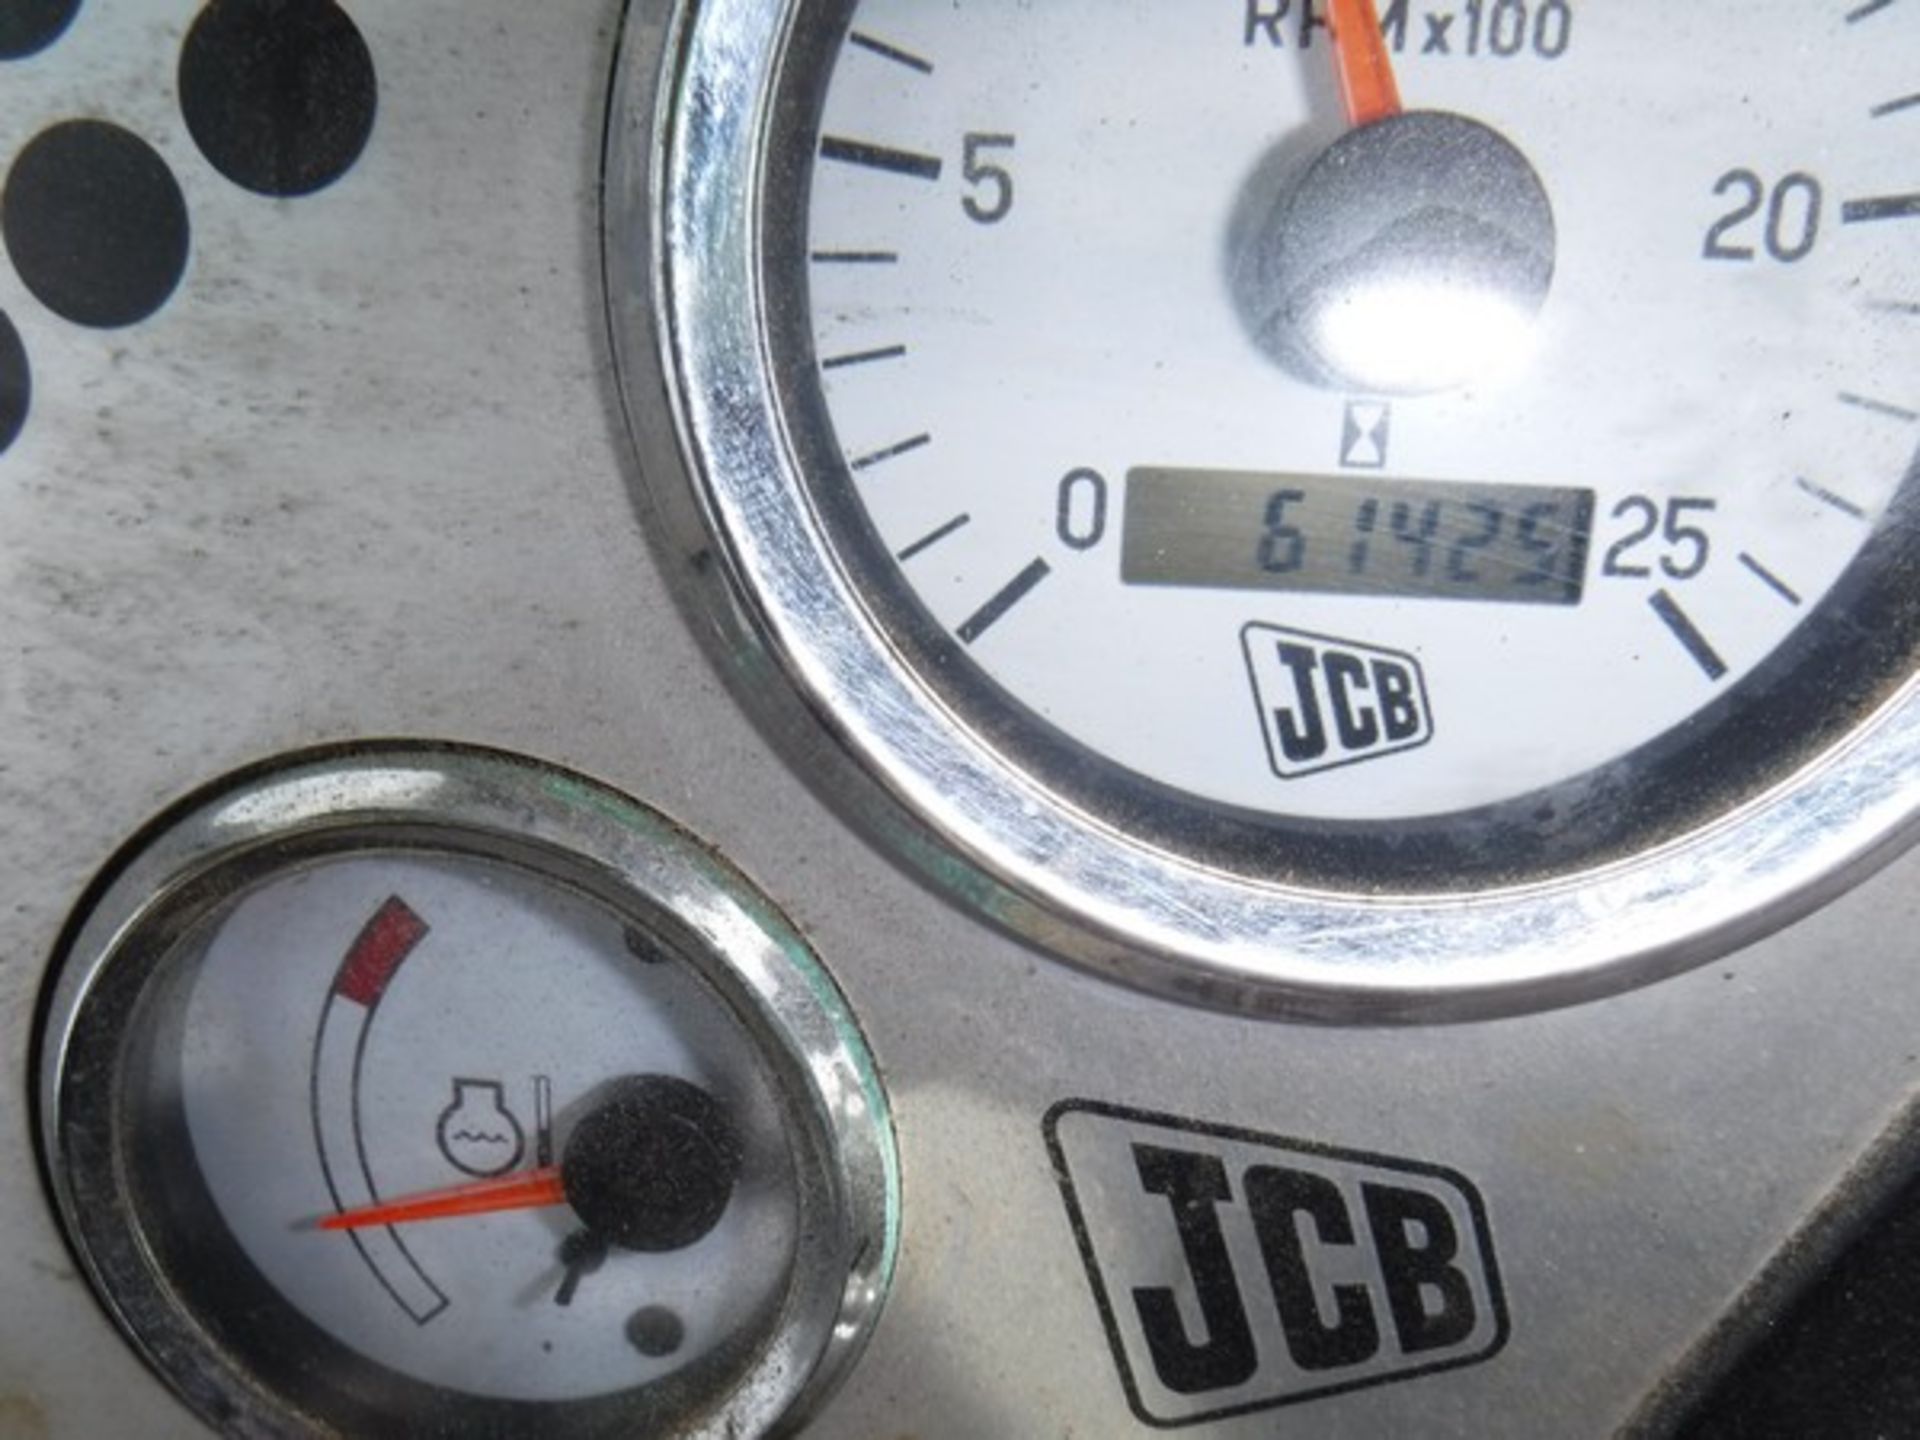 2006 JCB 3CX backhoe loader c/w 1 rear bucket & 1 front bucket.. Reg - SV55 FPD. S/N 0967334. 6142hr - Bild 8 aus 17